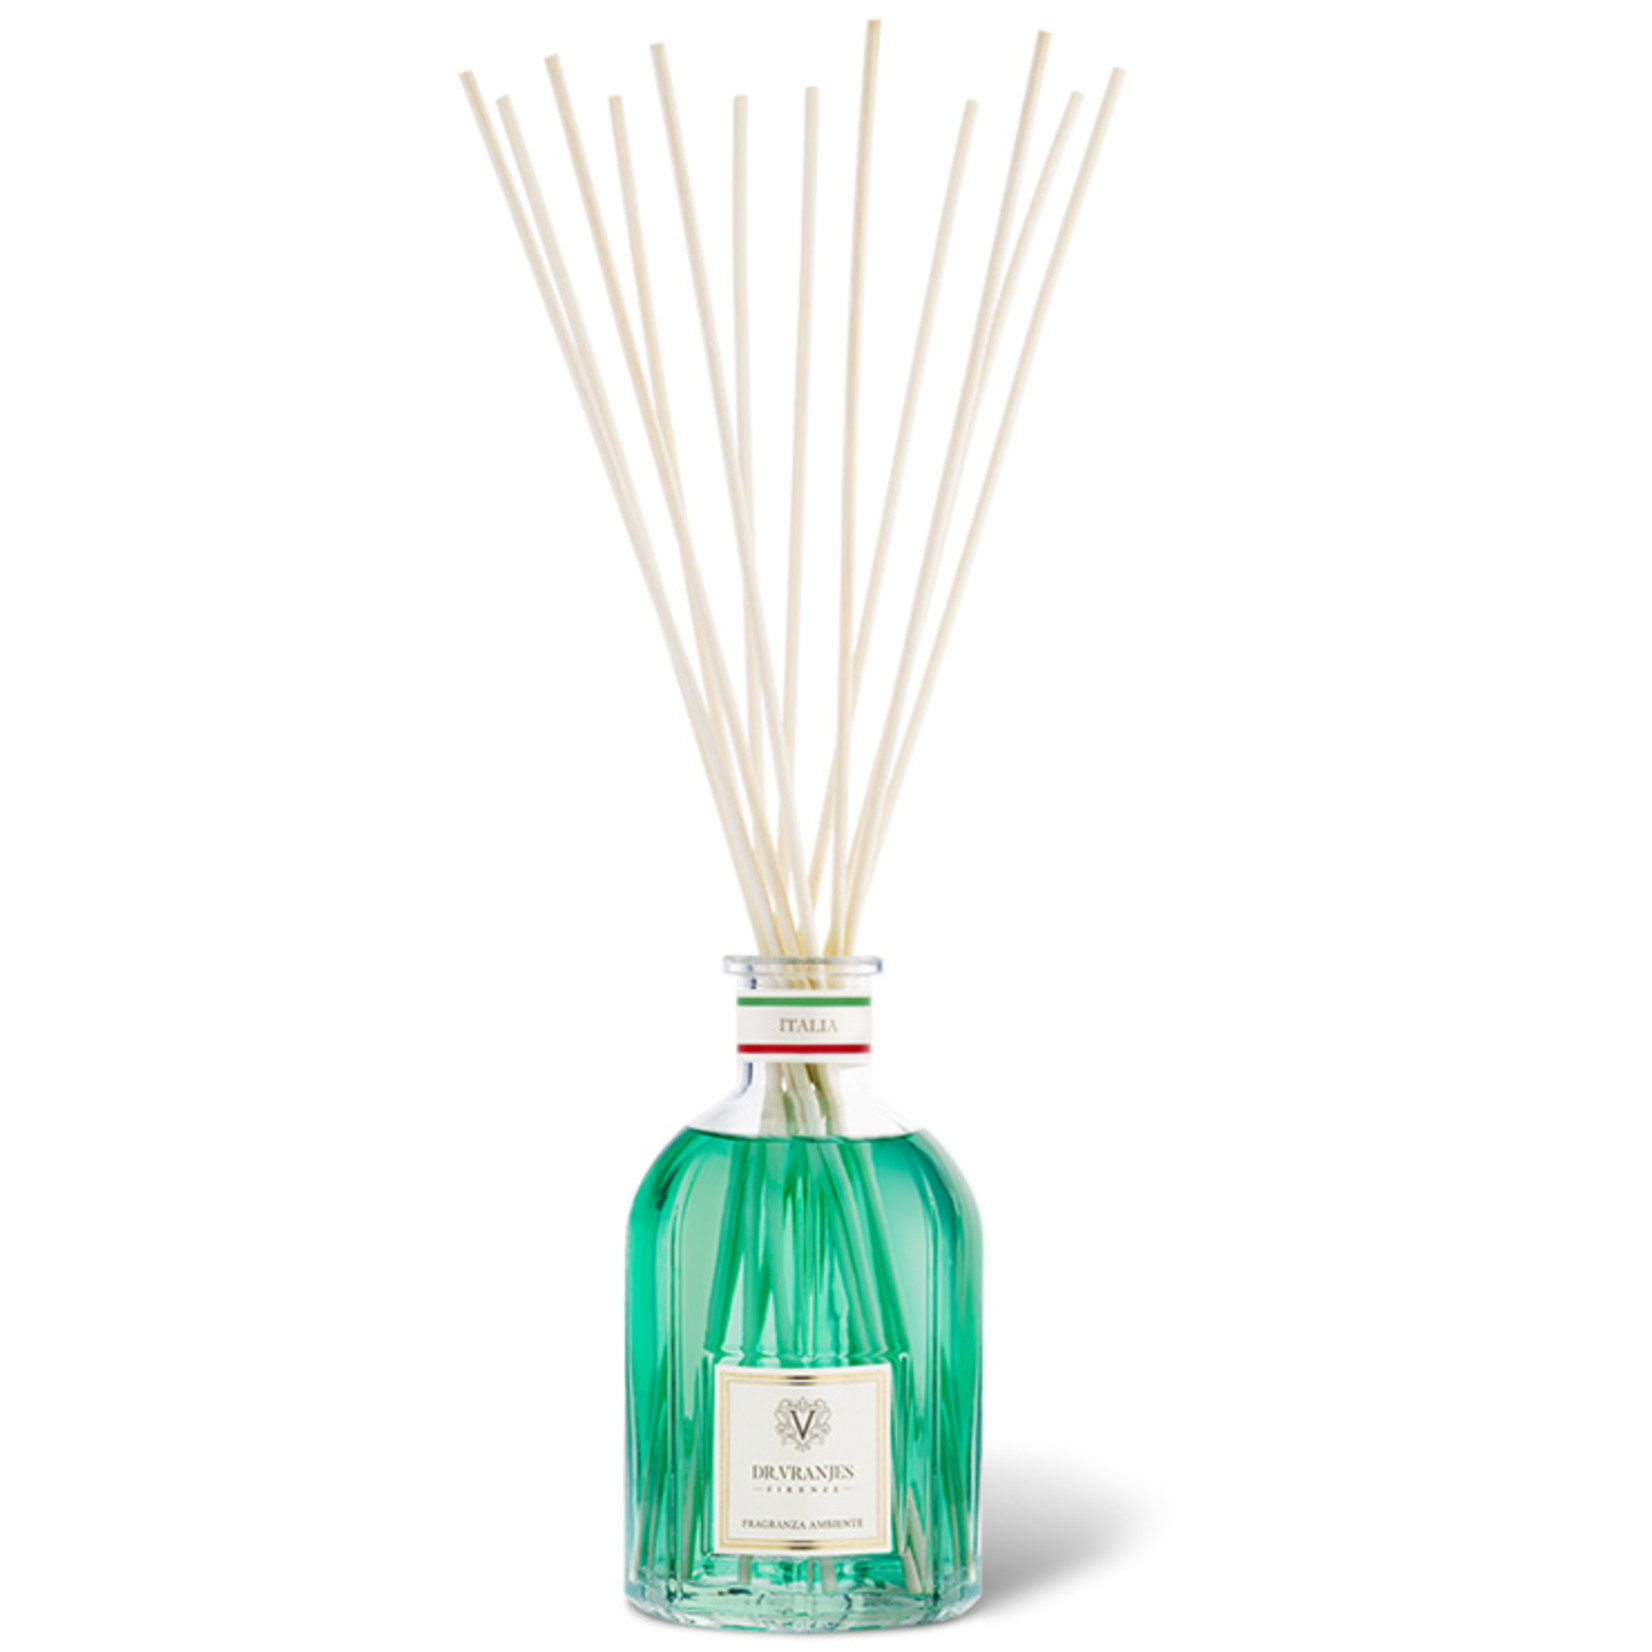 https://cdn.webshopapp.com/shops/300767/files/379958289/1652x1652x2/dr-vranjes-fragrance-diffuser-italia.jpg